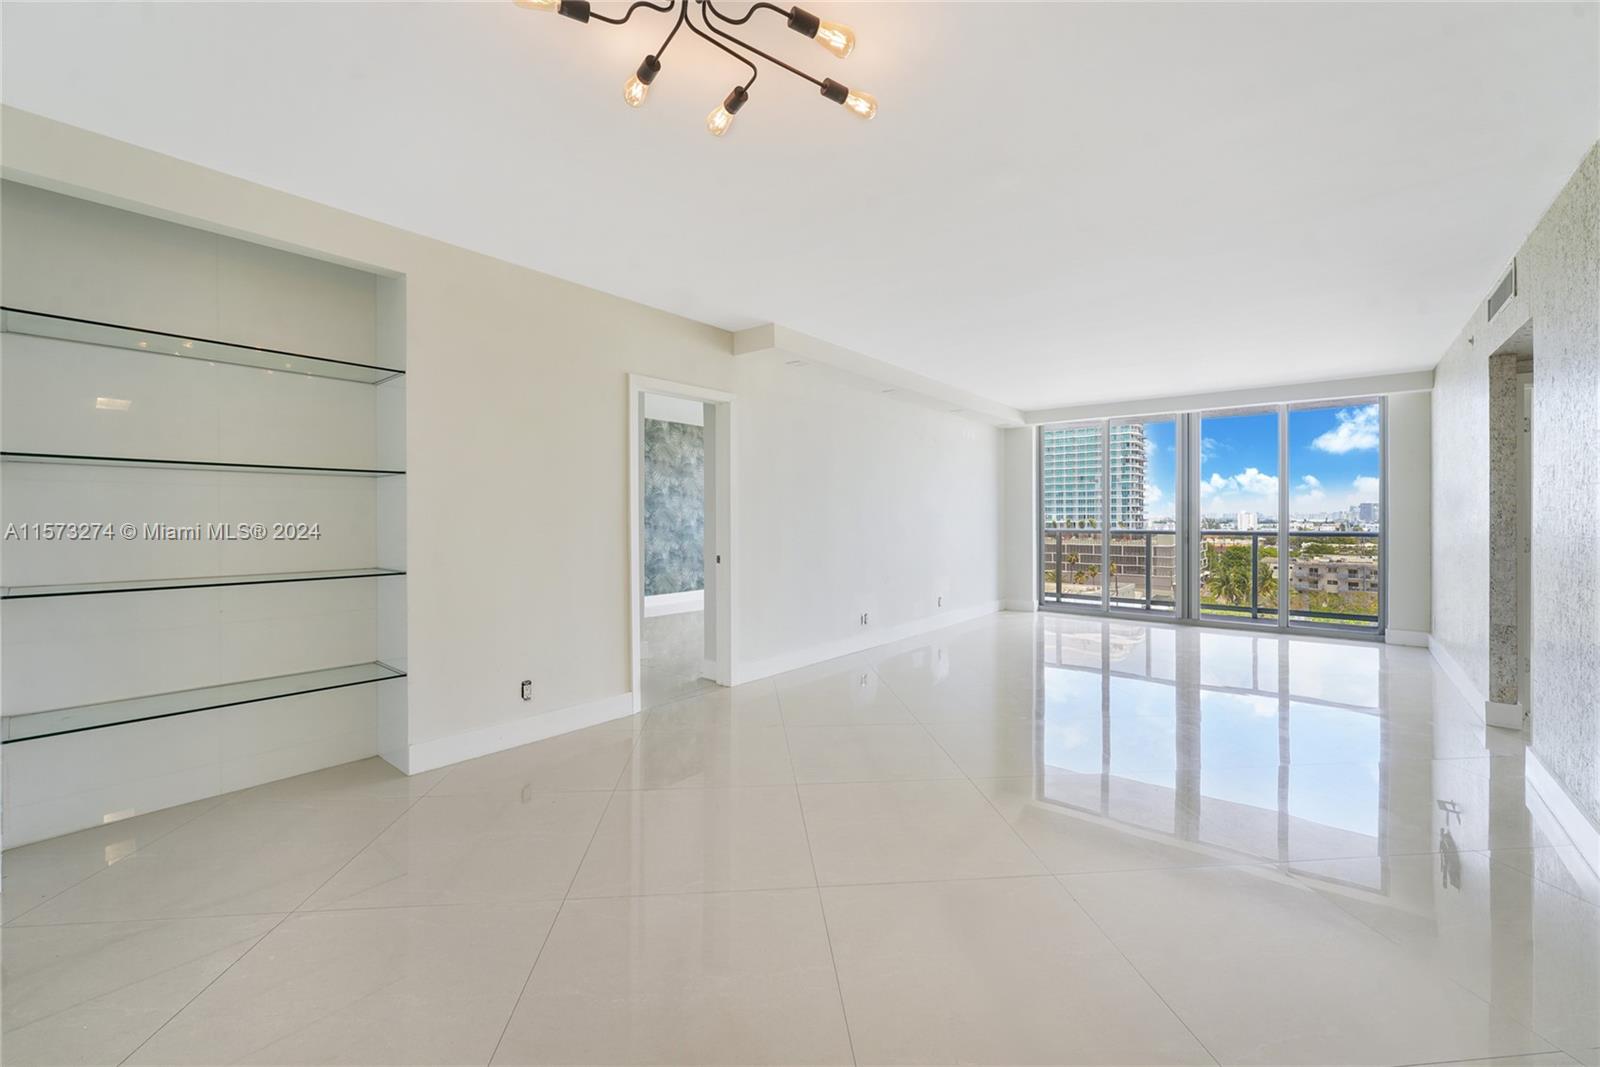 Rental Property at 401 69th St St 913, Miami Beach, Miami-Dade County, Florida - Bedrooms: 2 
Bathrooms: 2  - $3,600 MO.